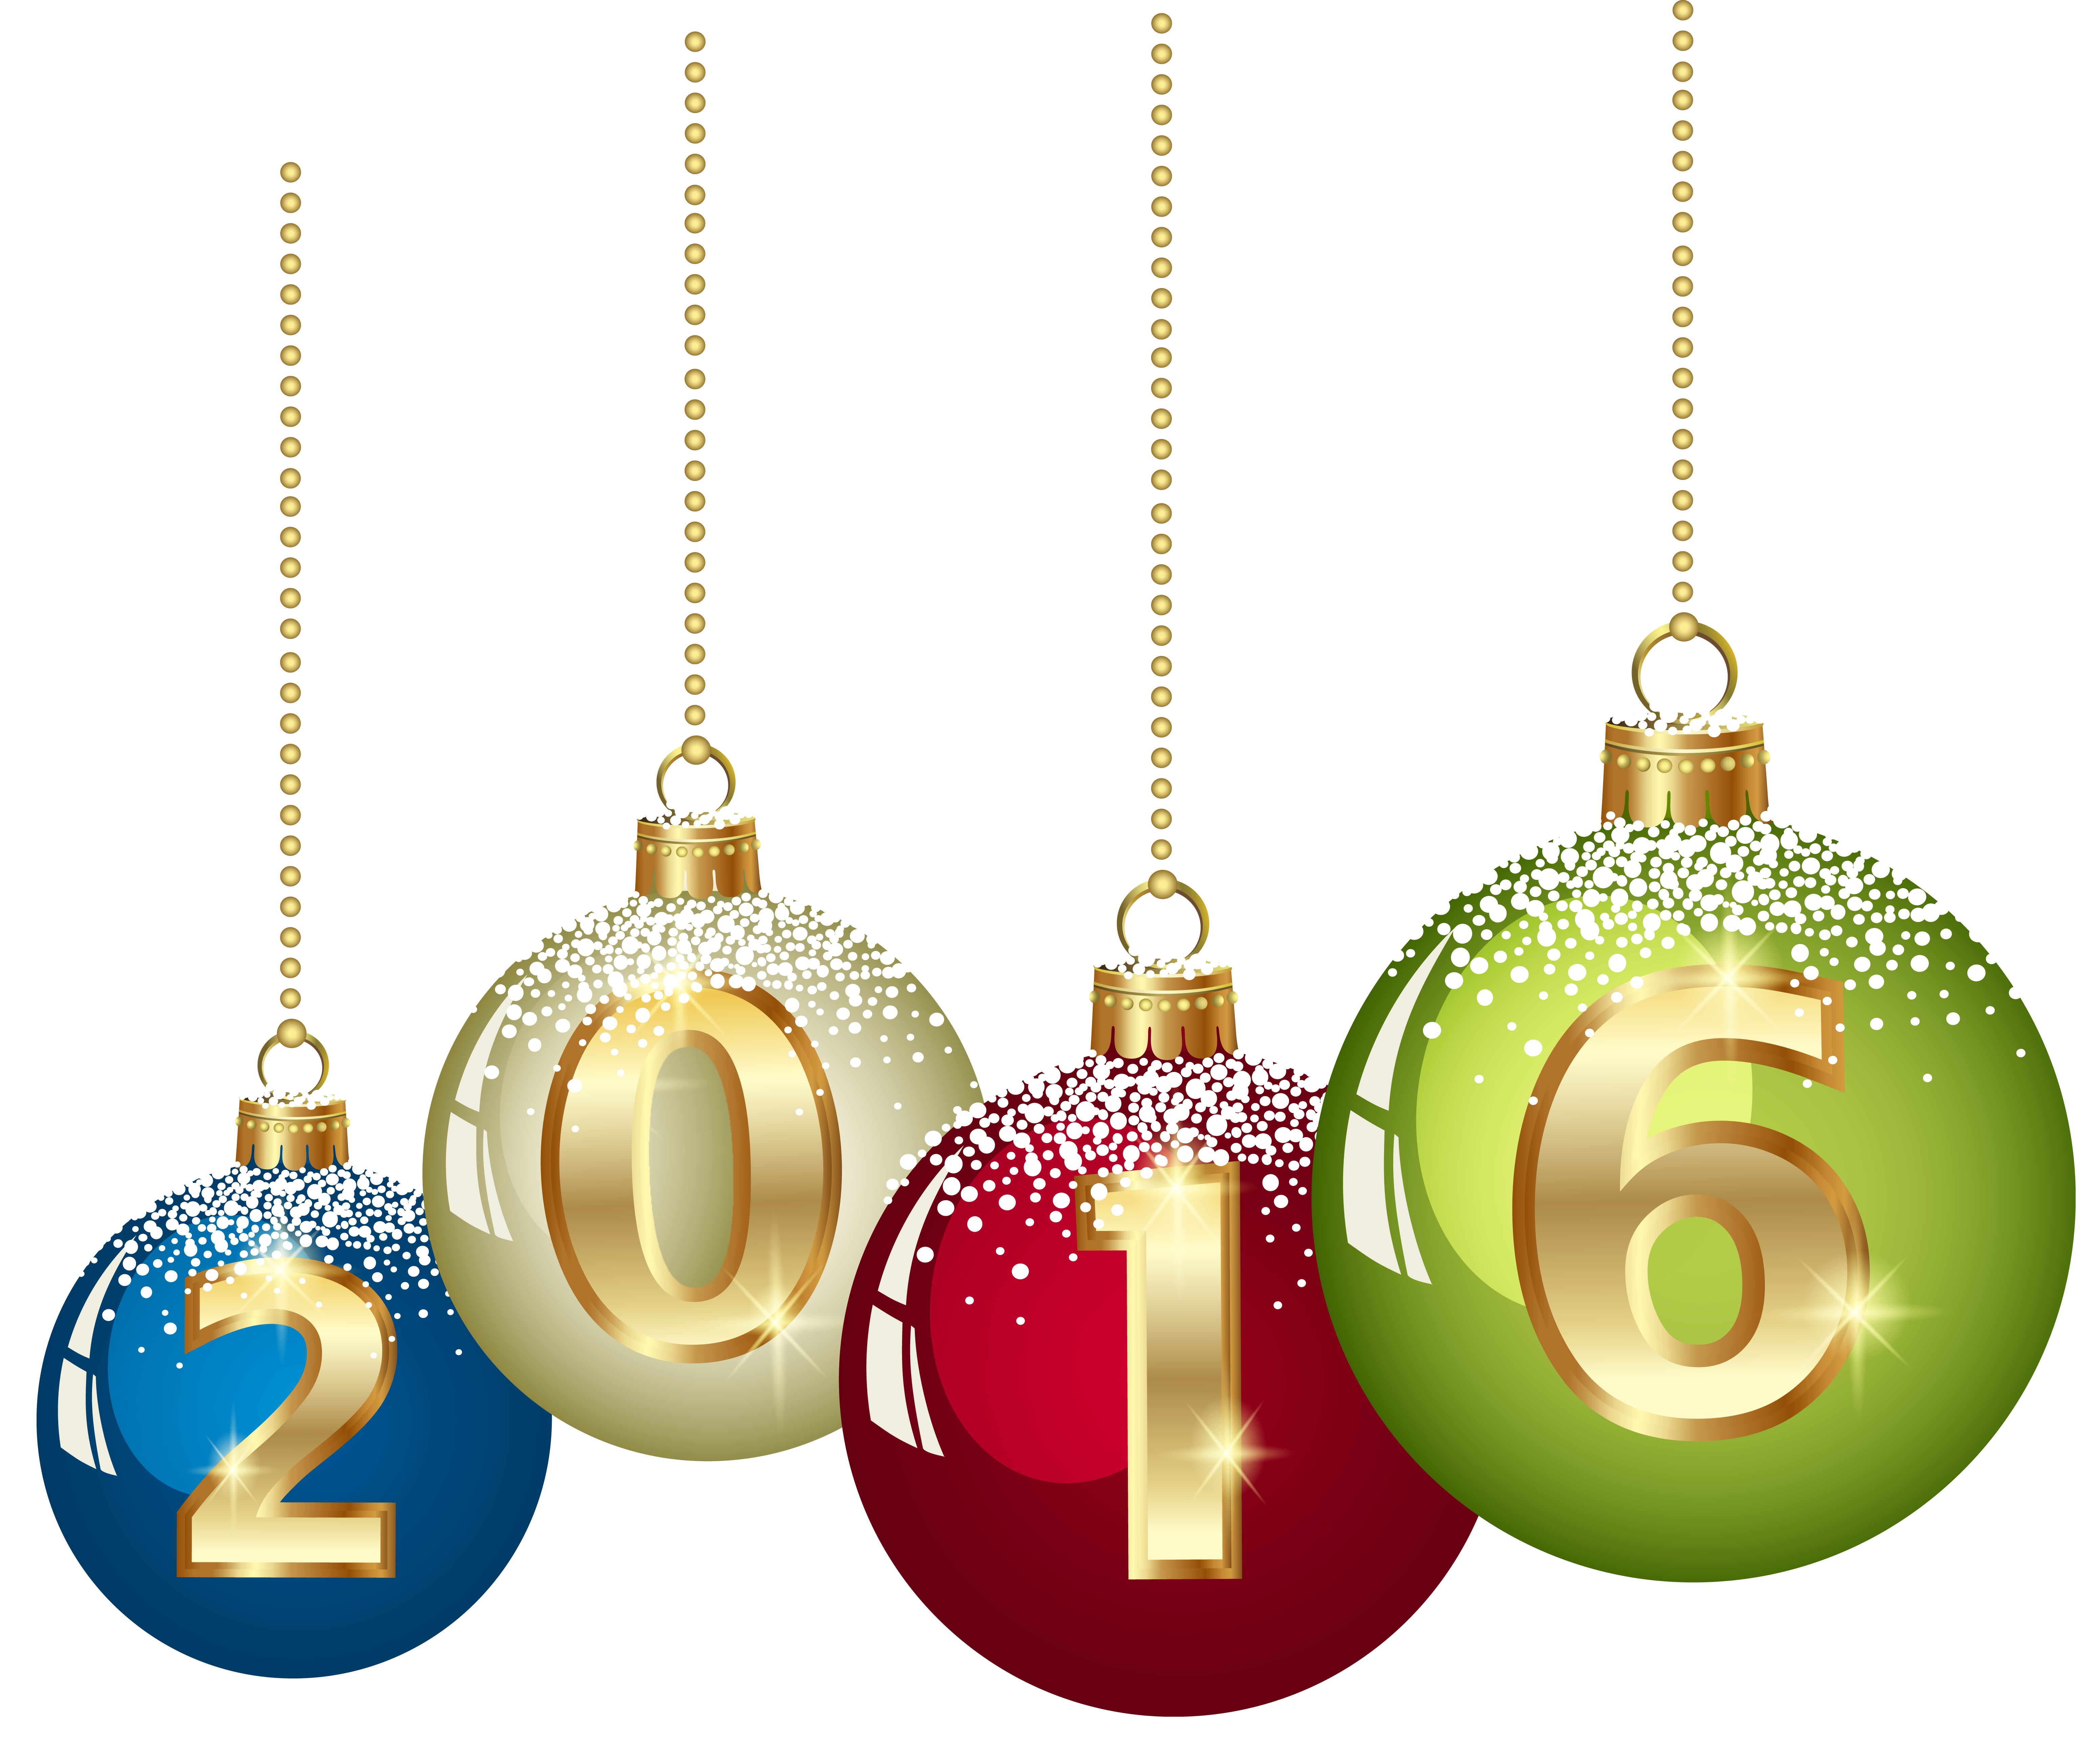 2016 Christmas Balls PNG Clipart Image.